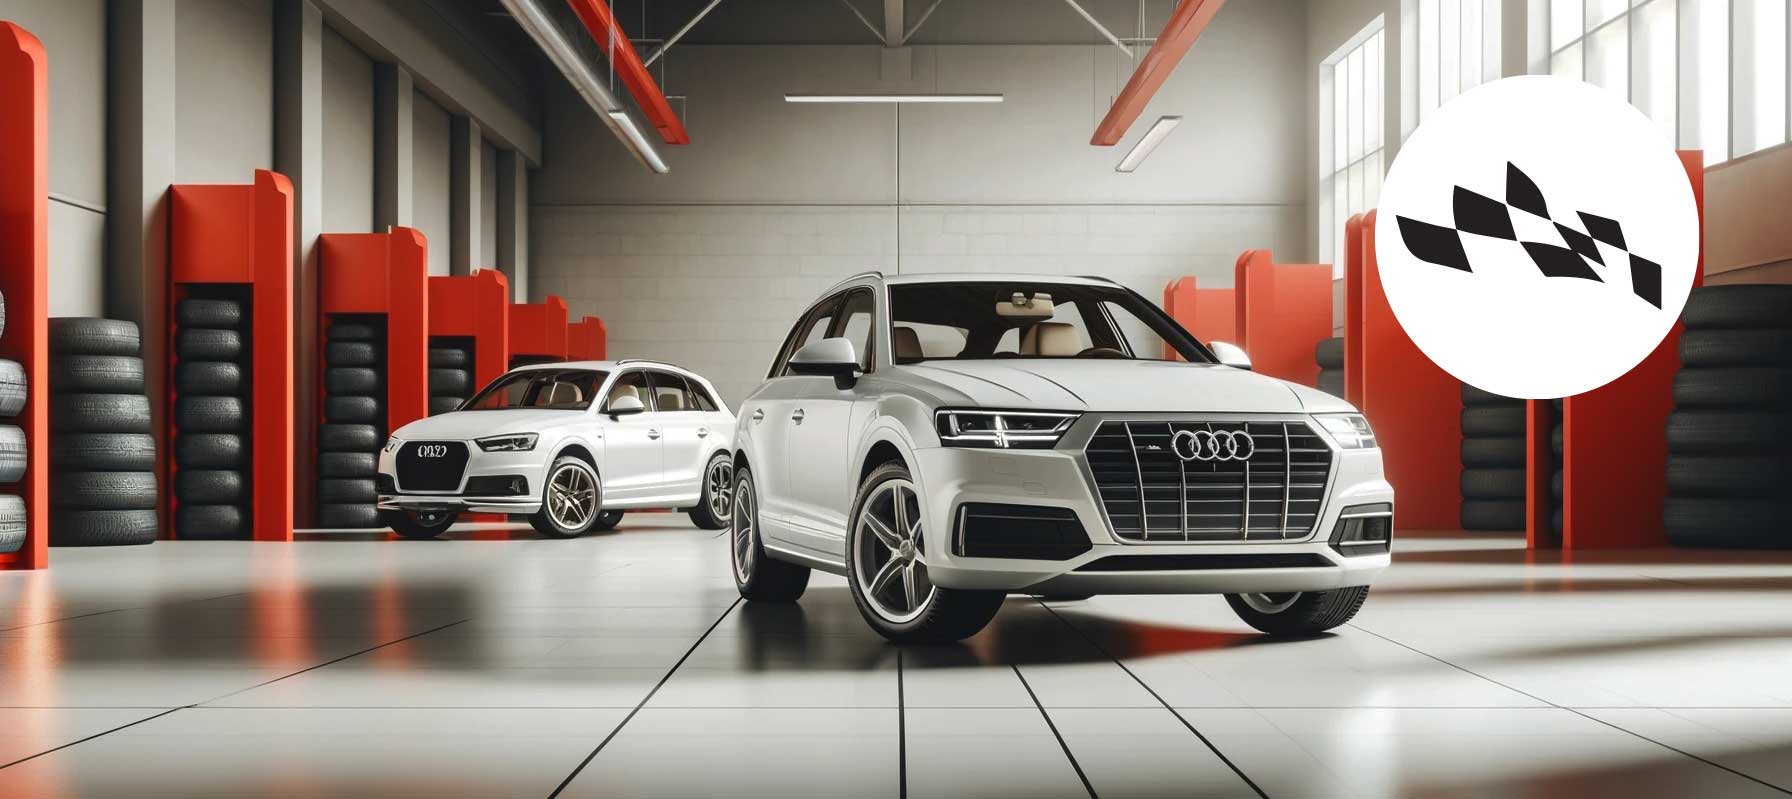 Audi tire warehouse image